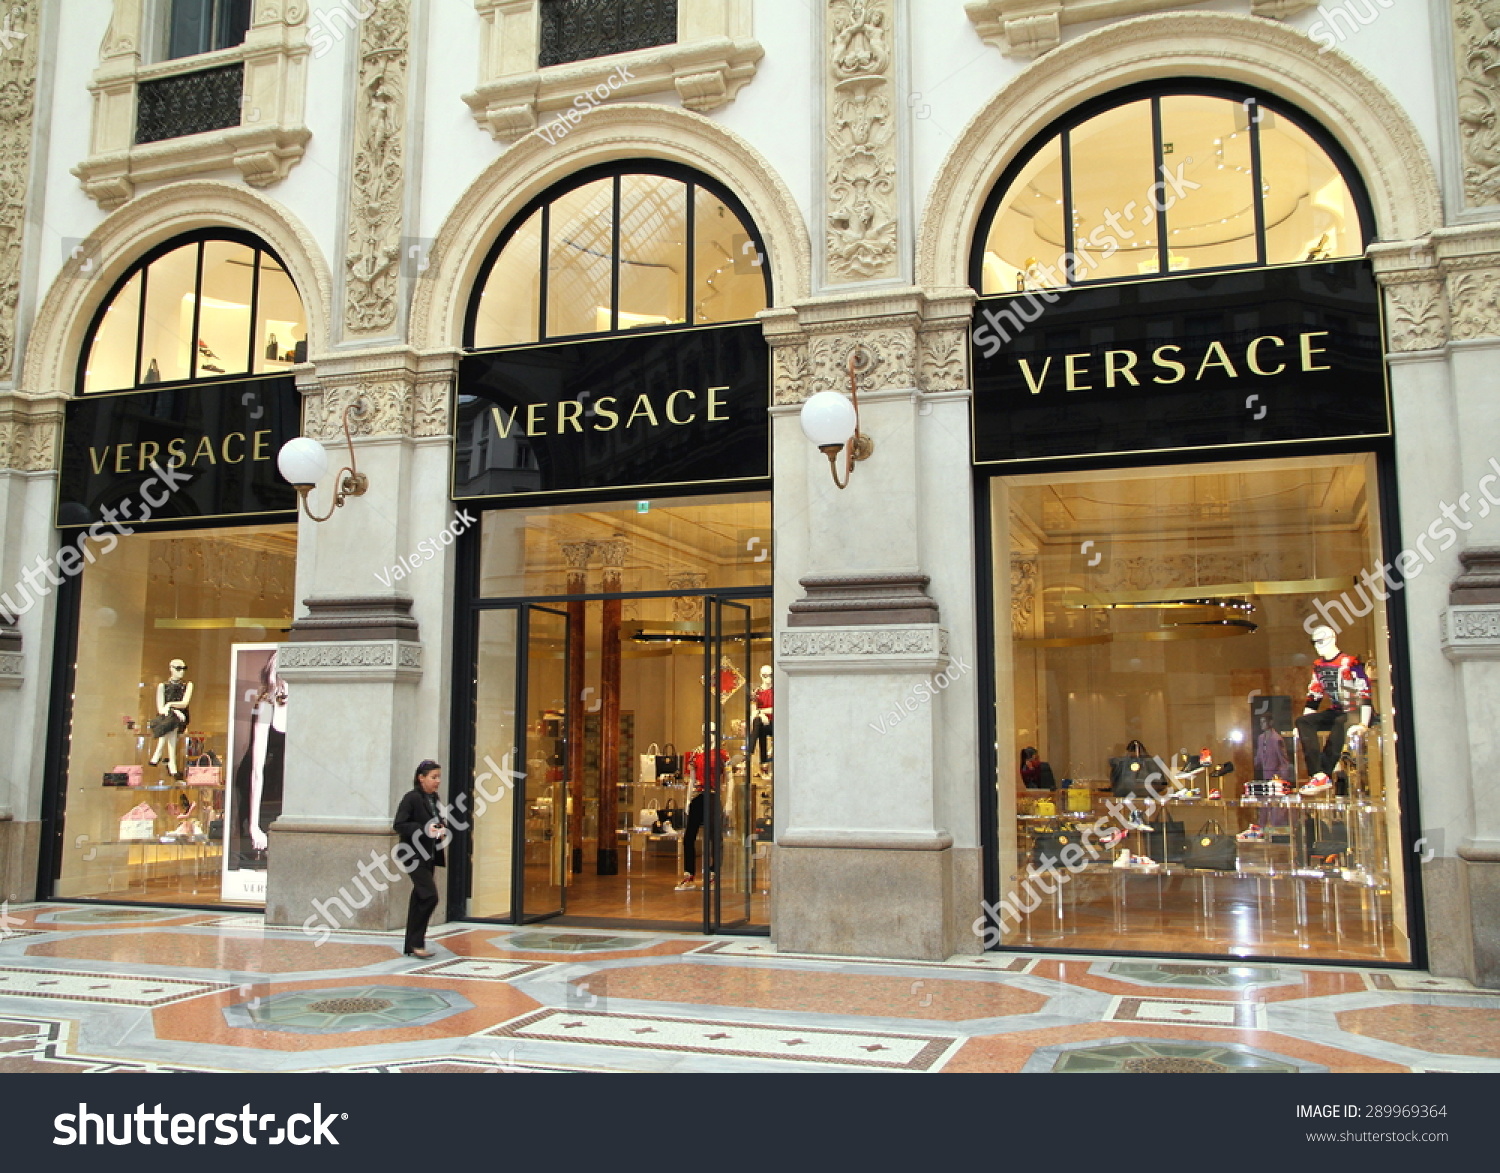 Milan Italy May 20 2015 Versace Stock Photo 289969364 - Shutterstock